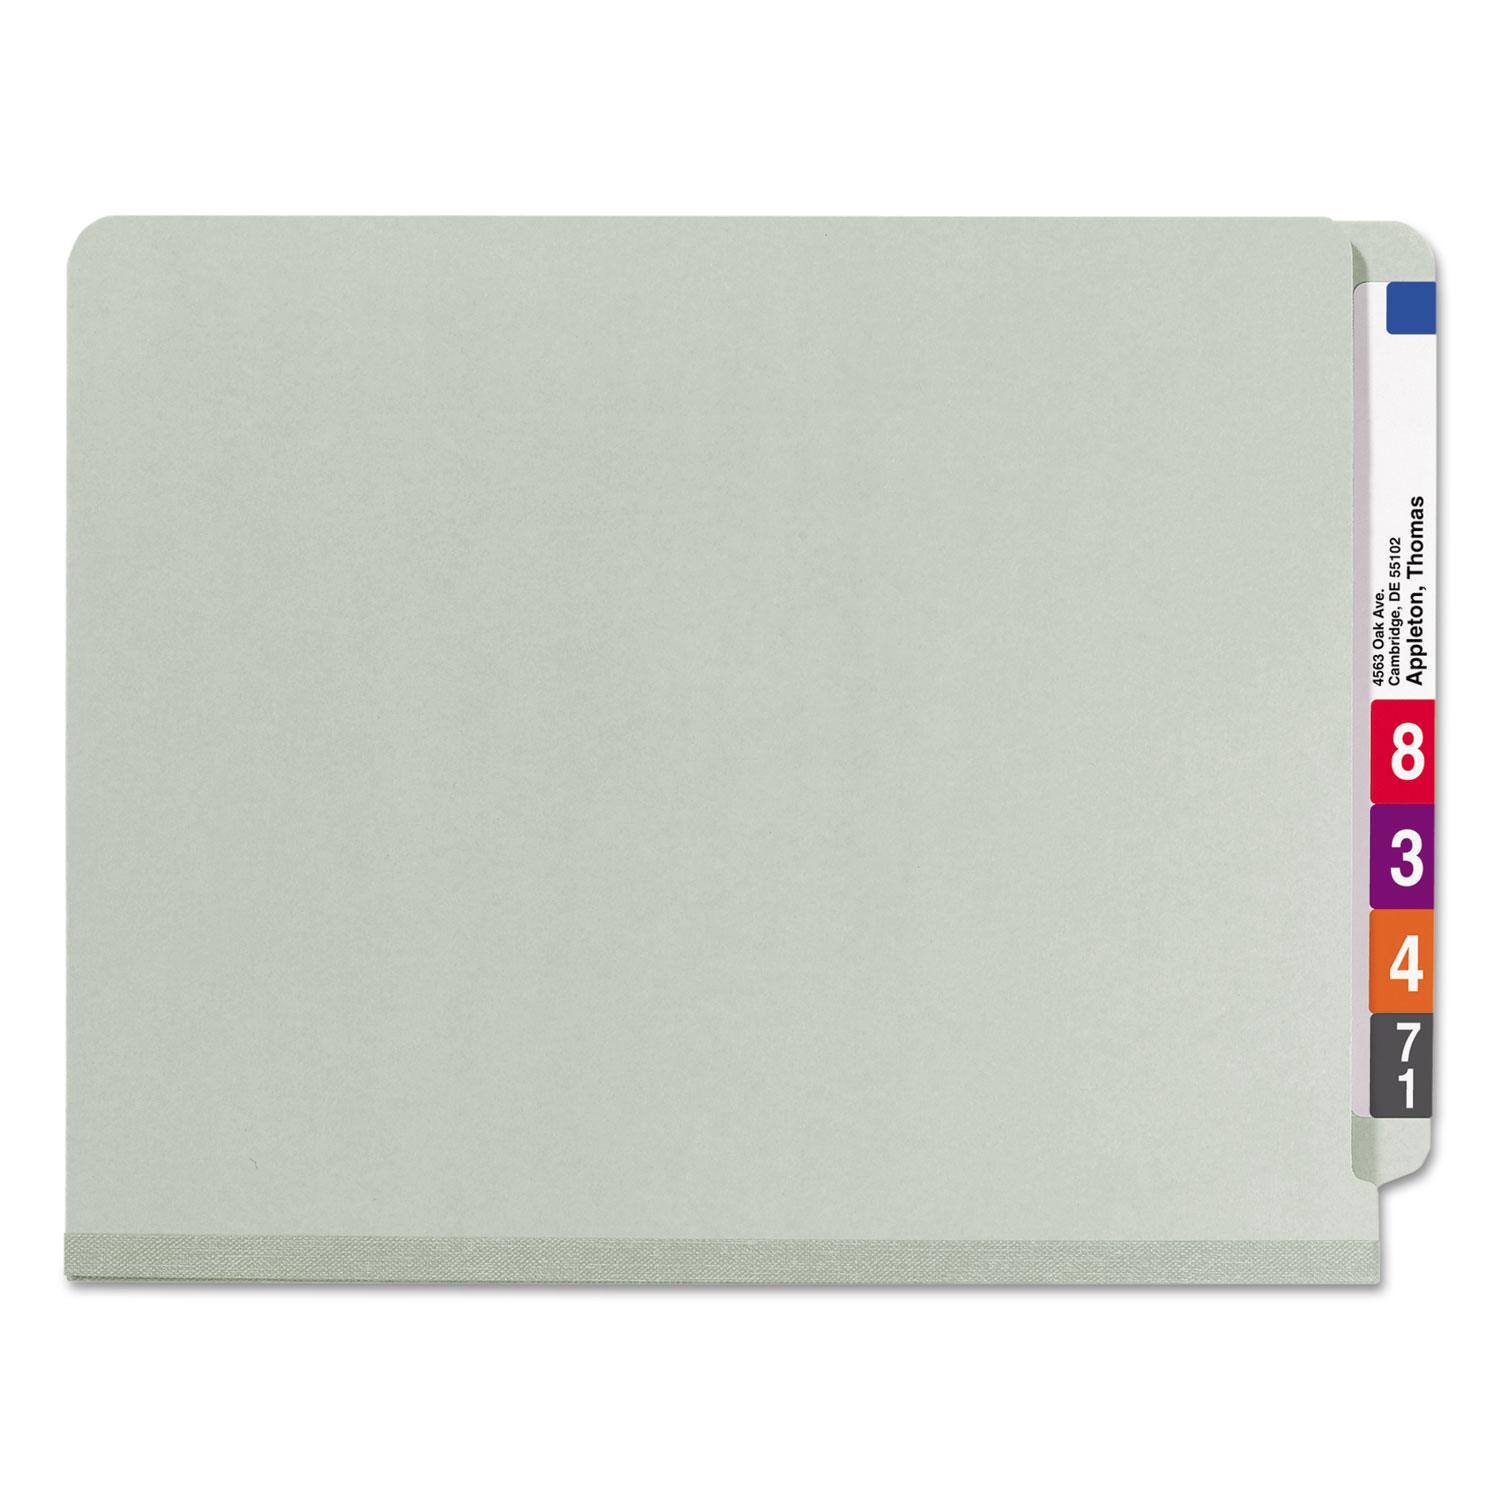 Pressboard End Tab Classification Folder, Letter, 8-Section, Gray/Green, 10/Box